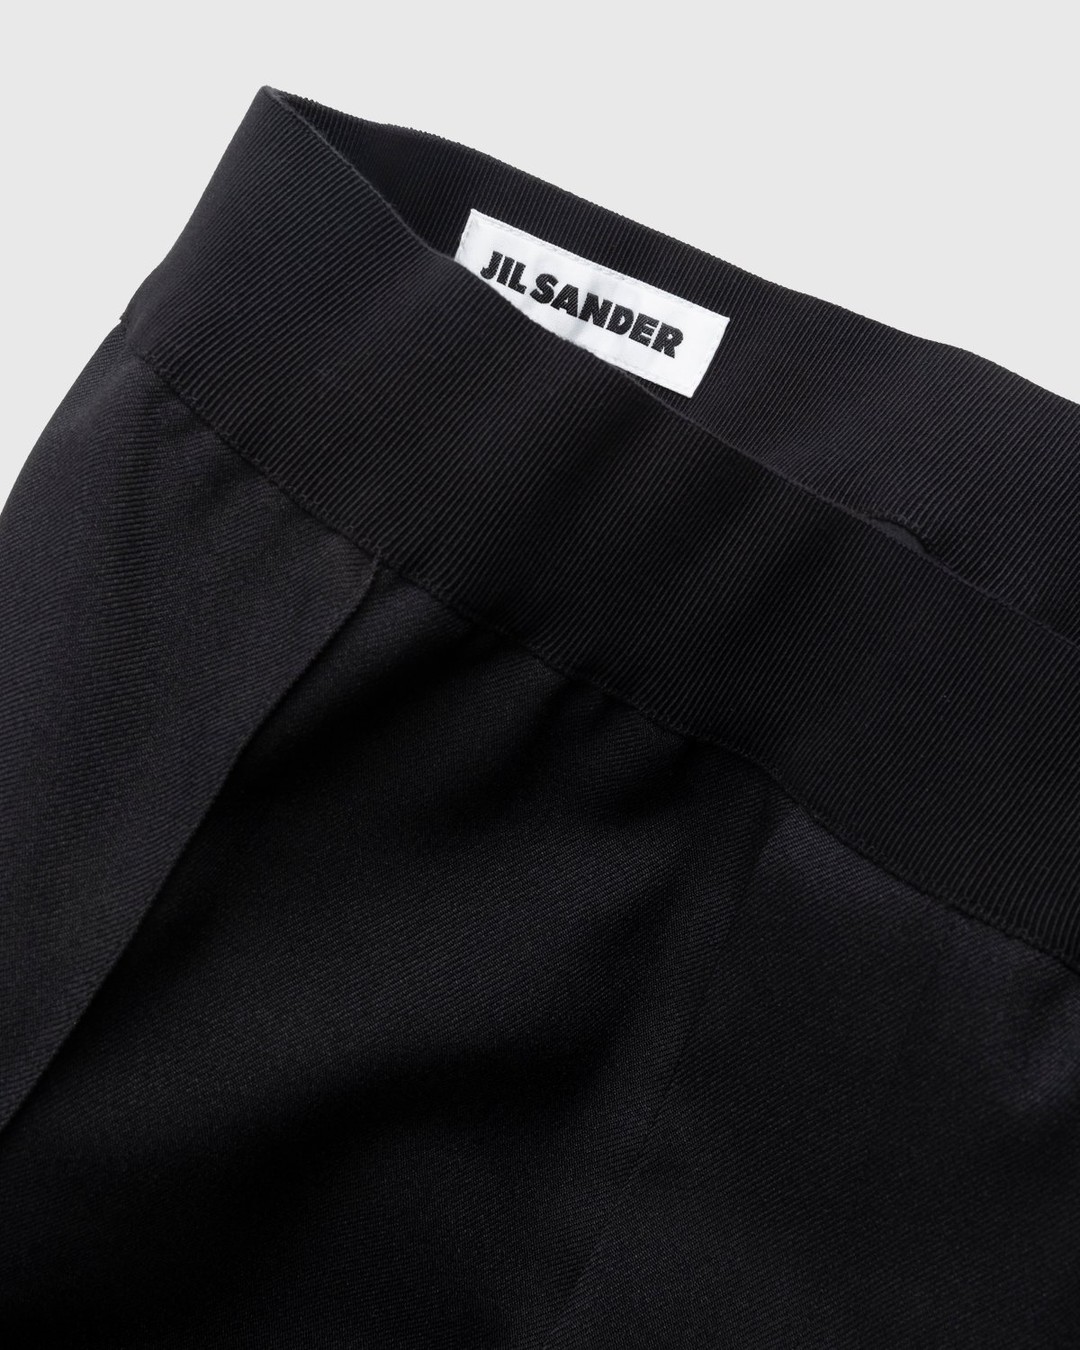 Jil Sander – Polyester Trousers Black - Trousers - Black - Image 3